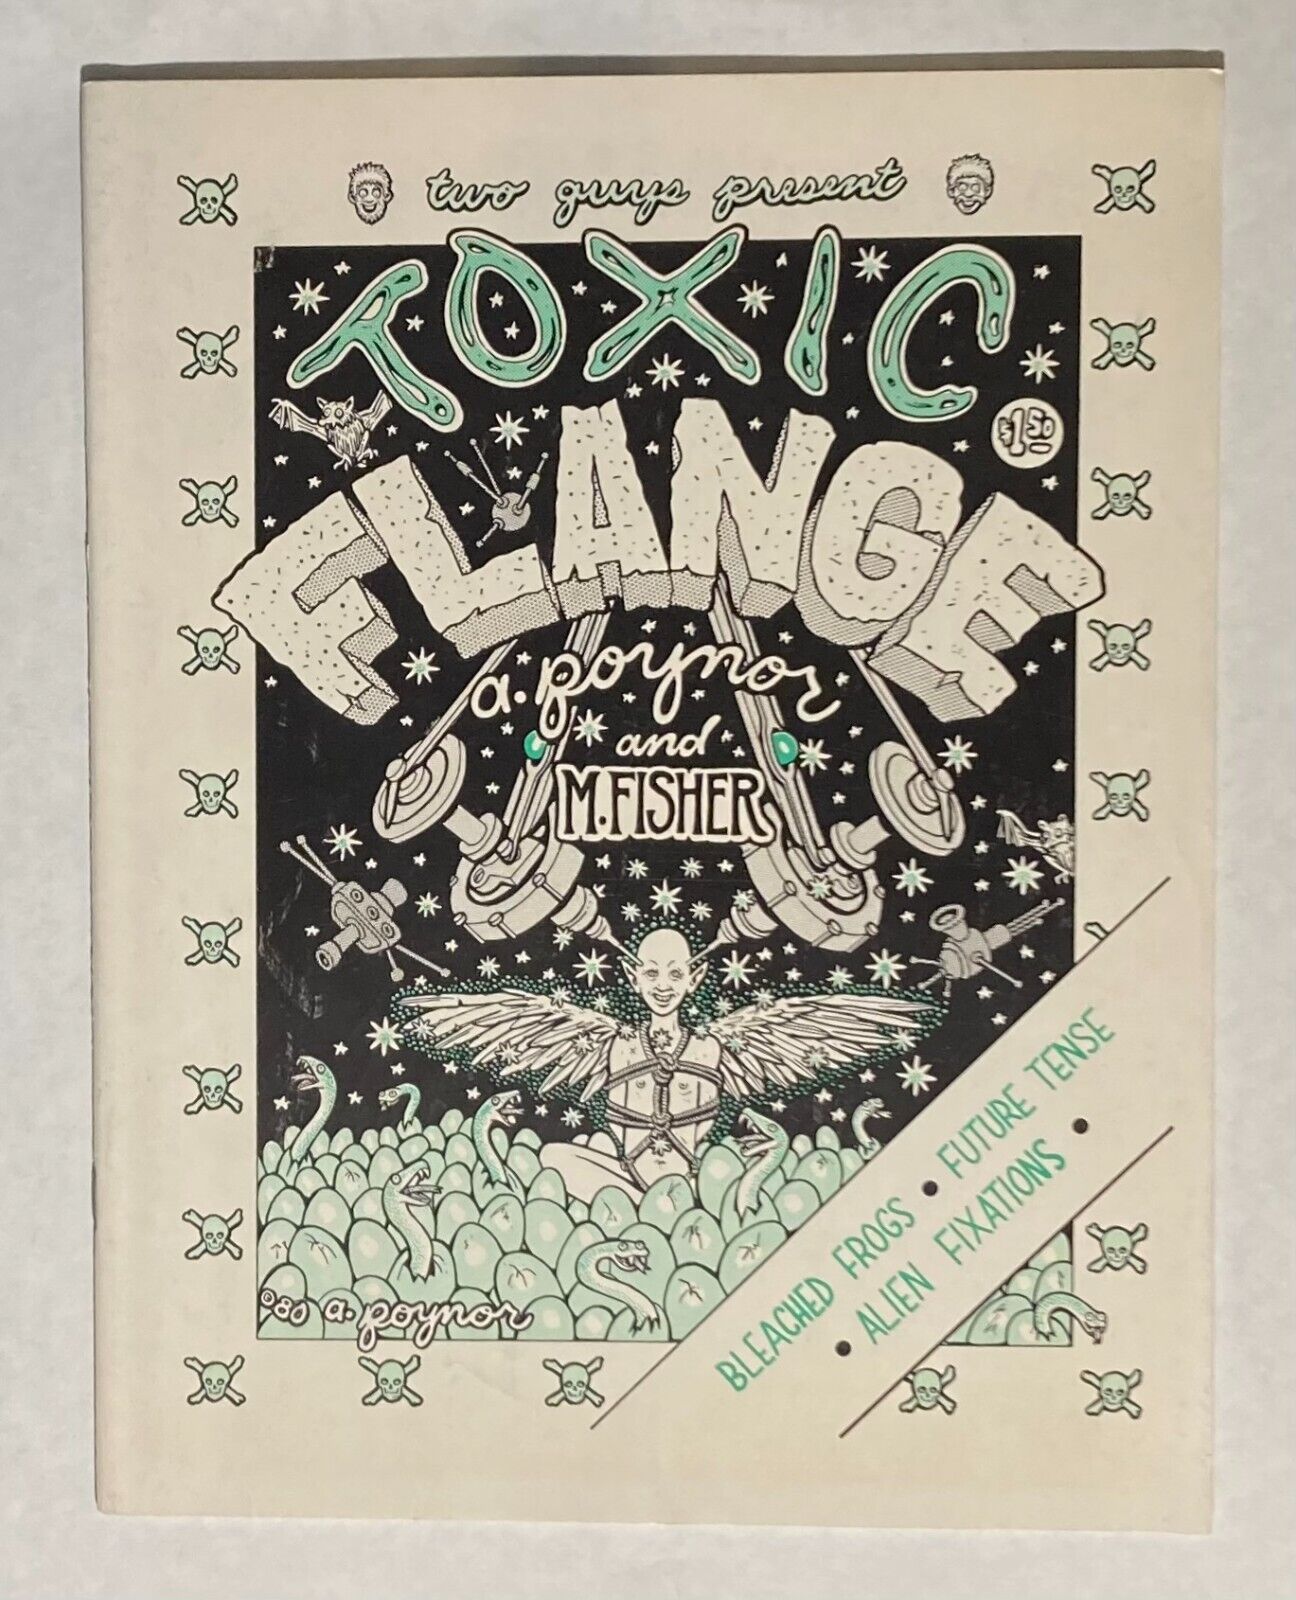 Toxic Flange #1 Underground Comix 1980 Mark Fisher, Andy Poynor